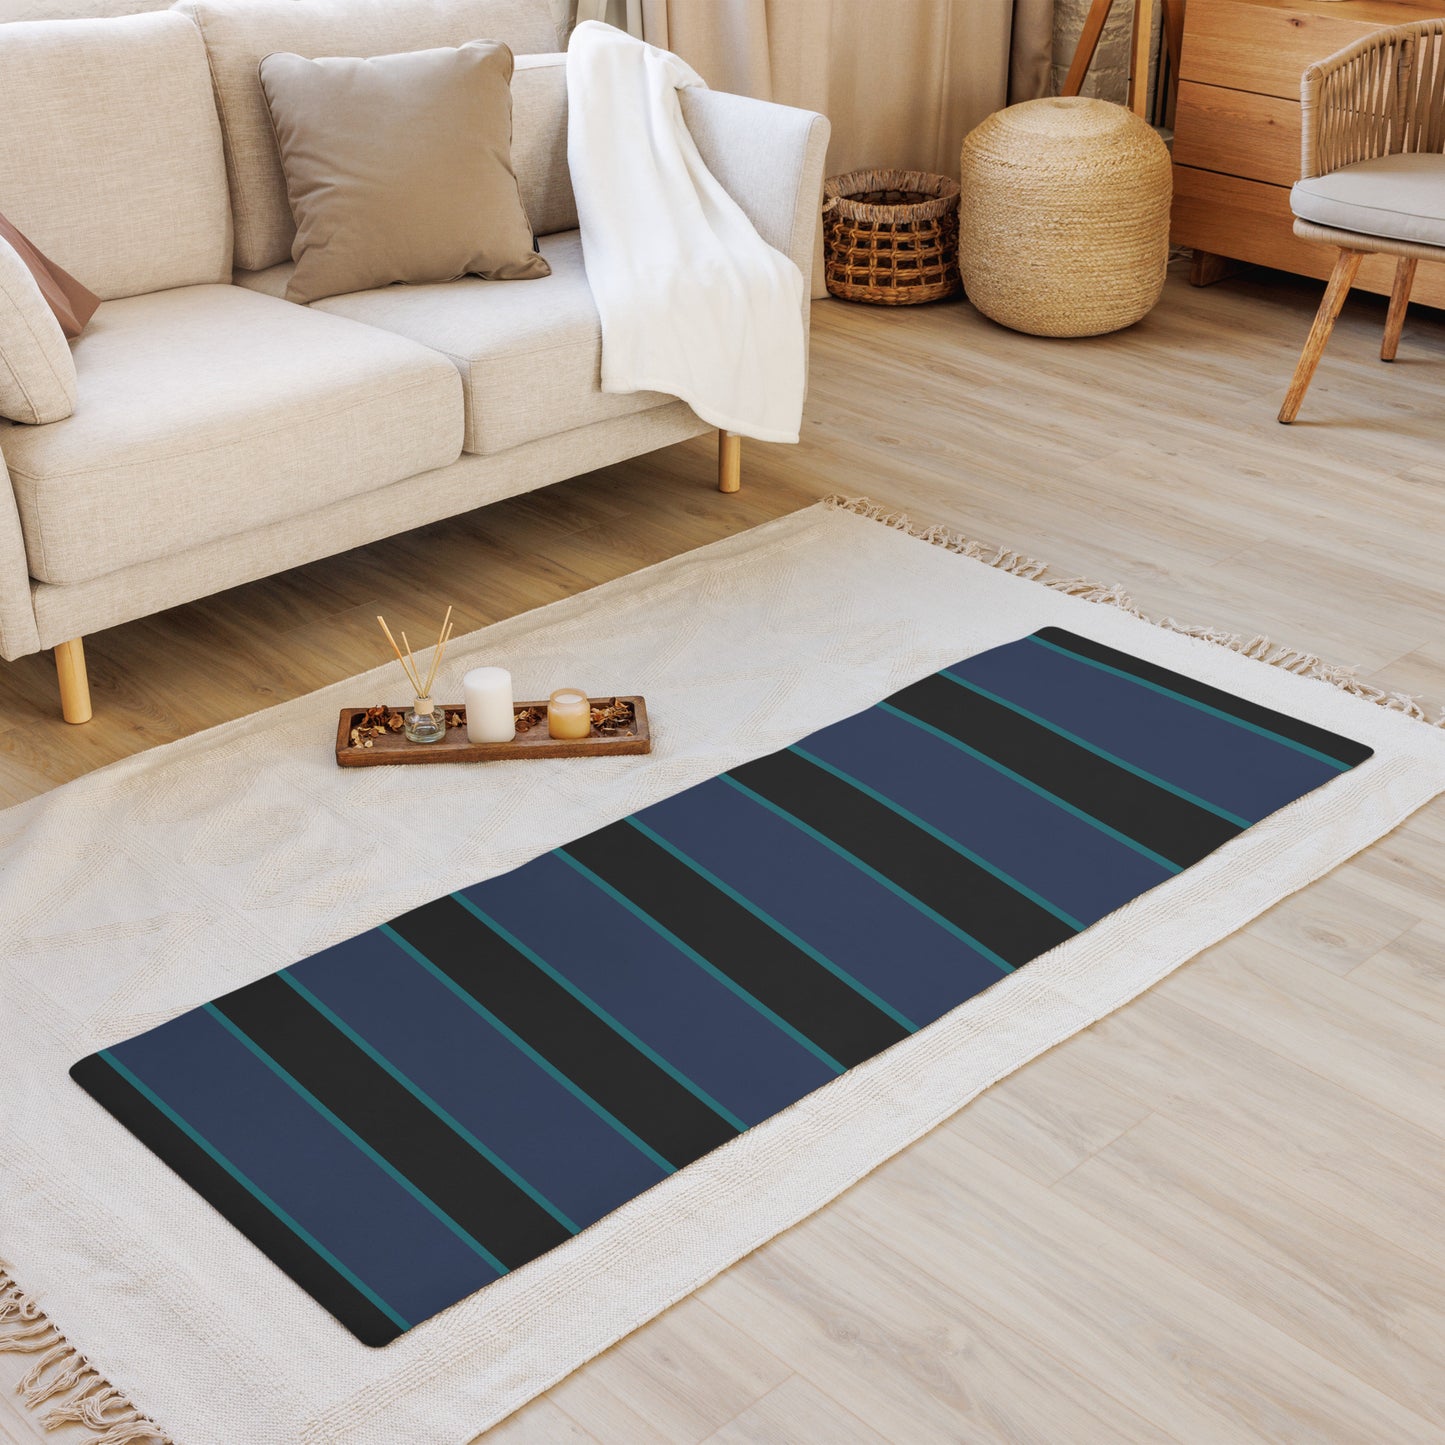 Blue and Black Striped Yoga Mat